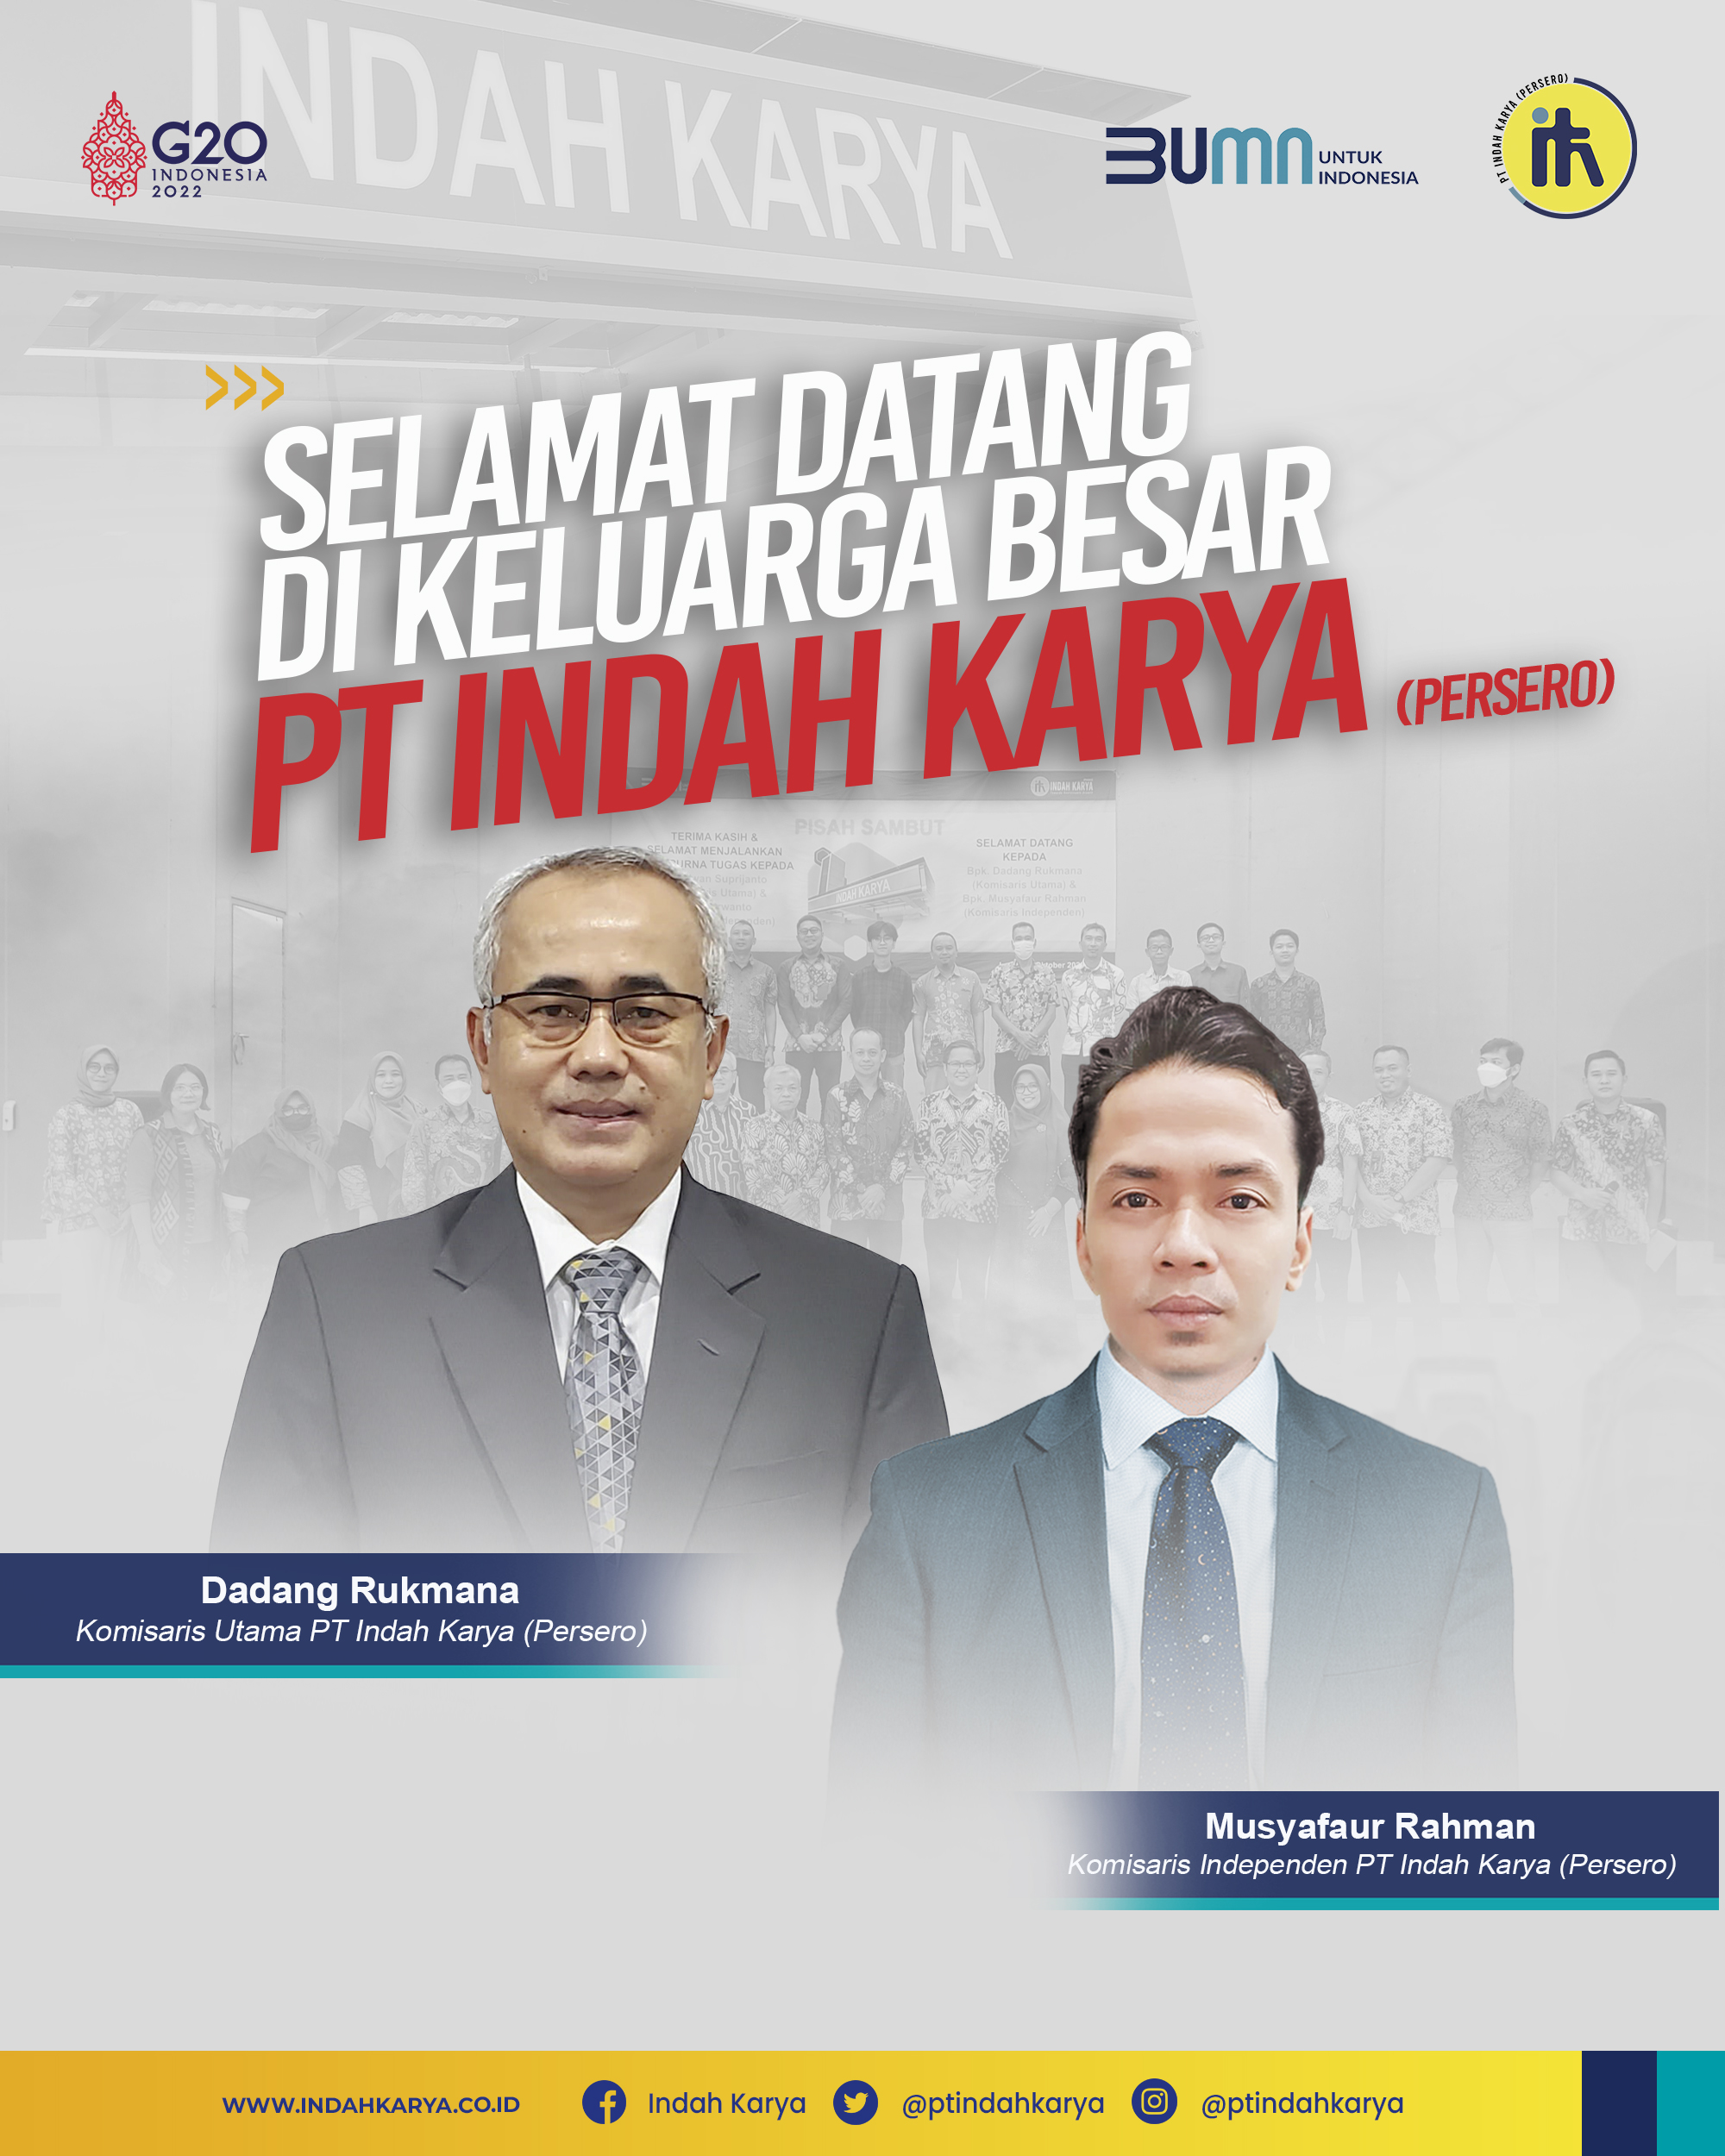 Welcome to the big family of PT Indah Karya (Persero)